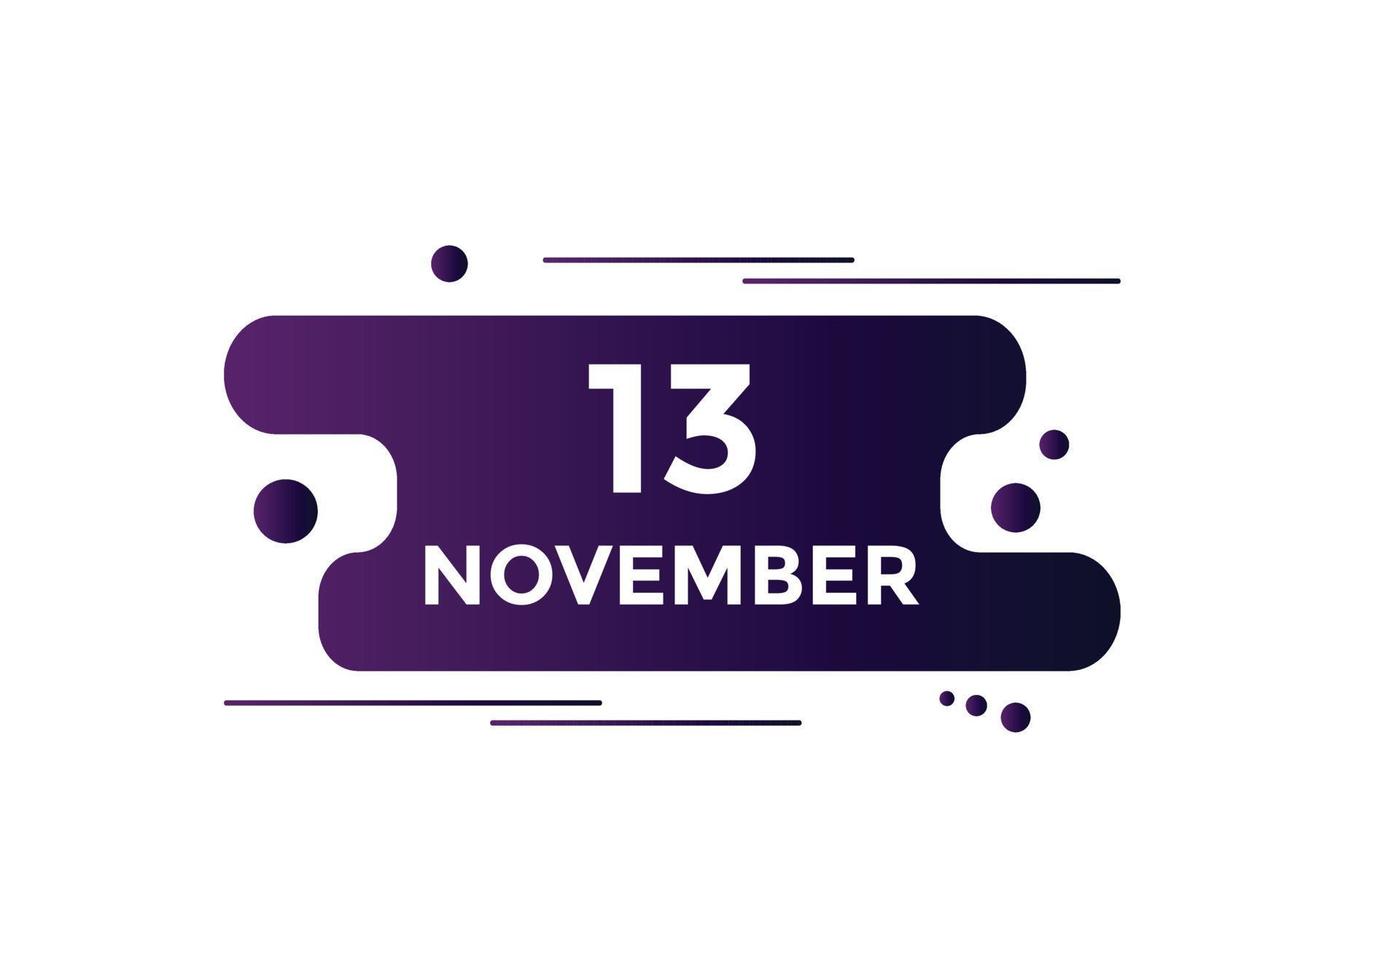 november 13 calendar reminder. 13th november daily calendar icon template. Calendar 13th november icon Design template. Vector illustration